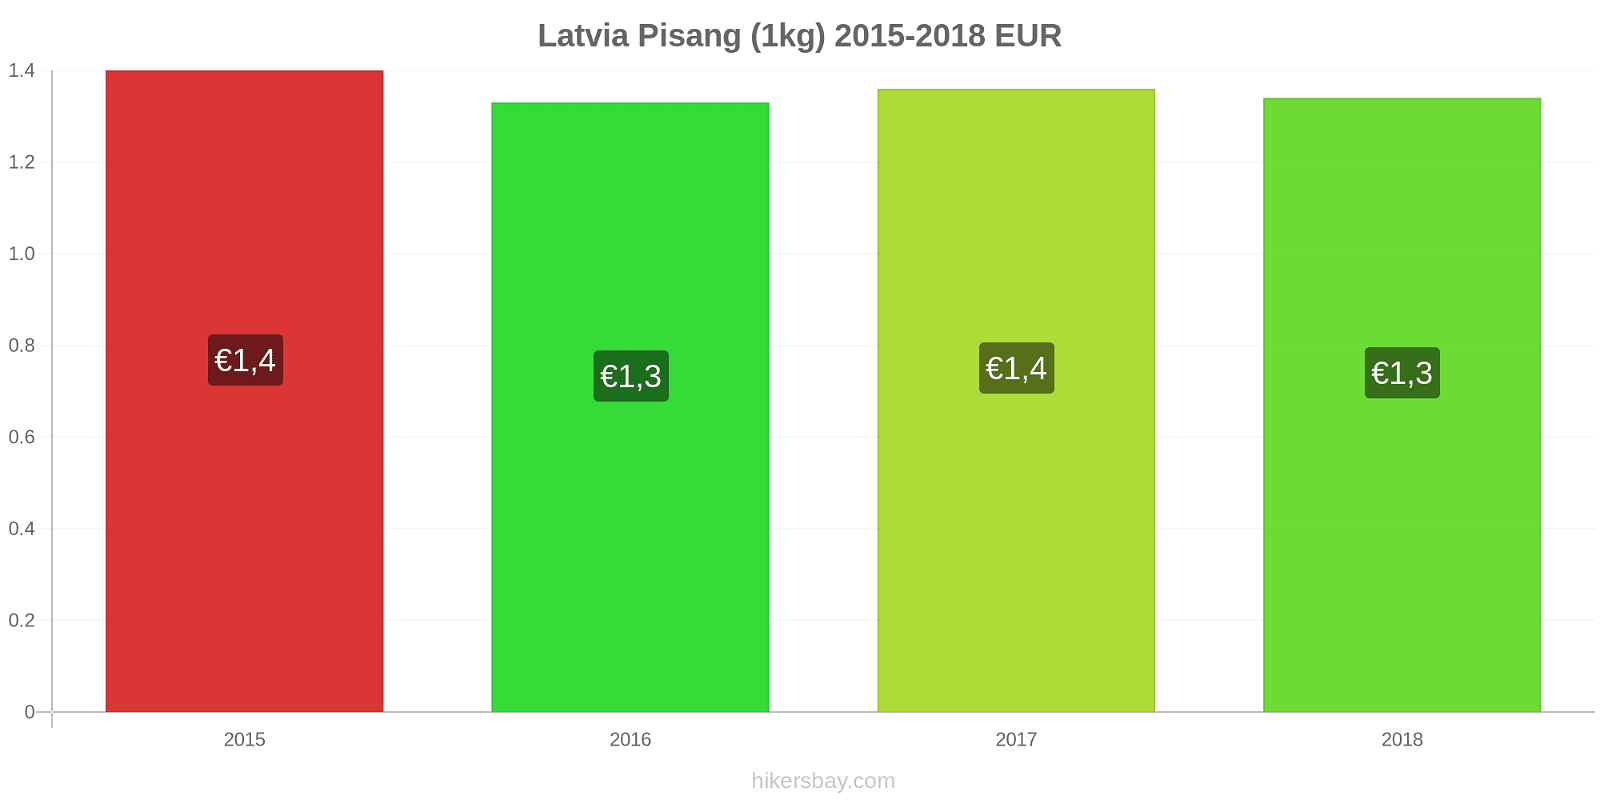 Latvia perubahan harga Pisang (1kg) hikersbay.com